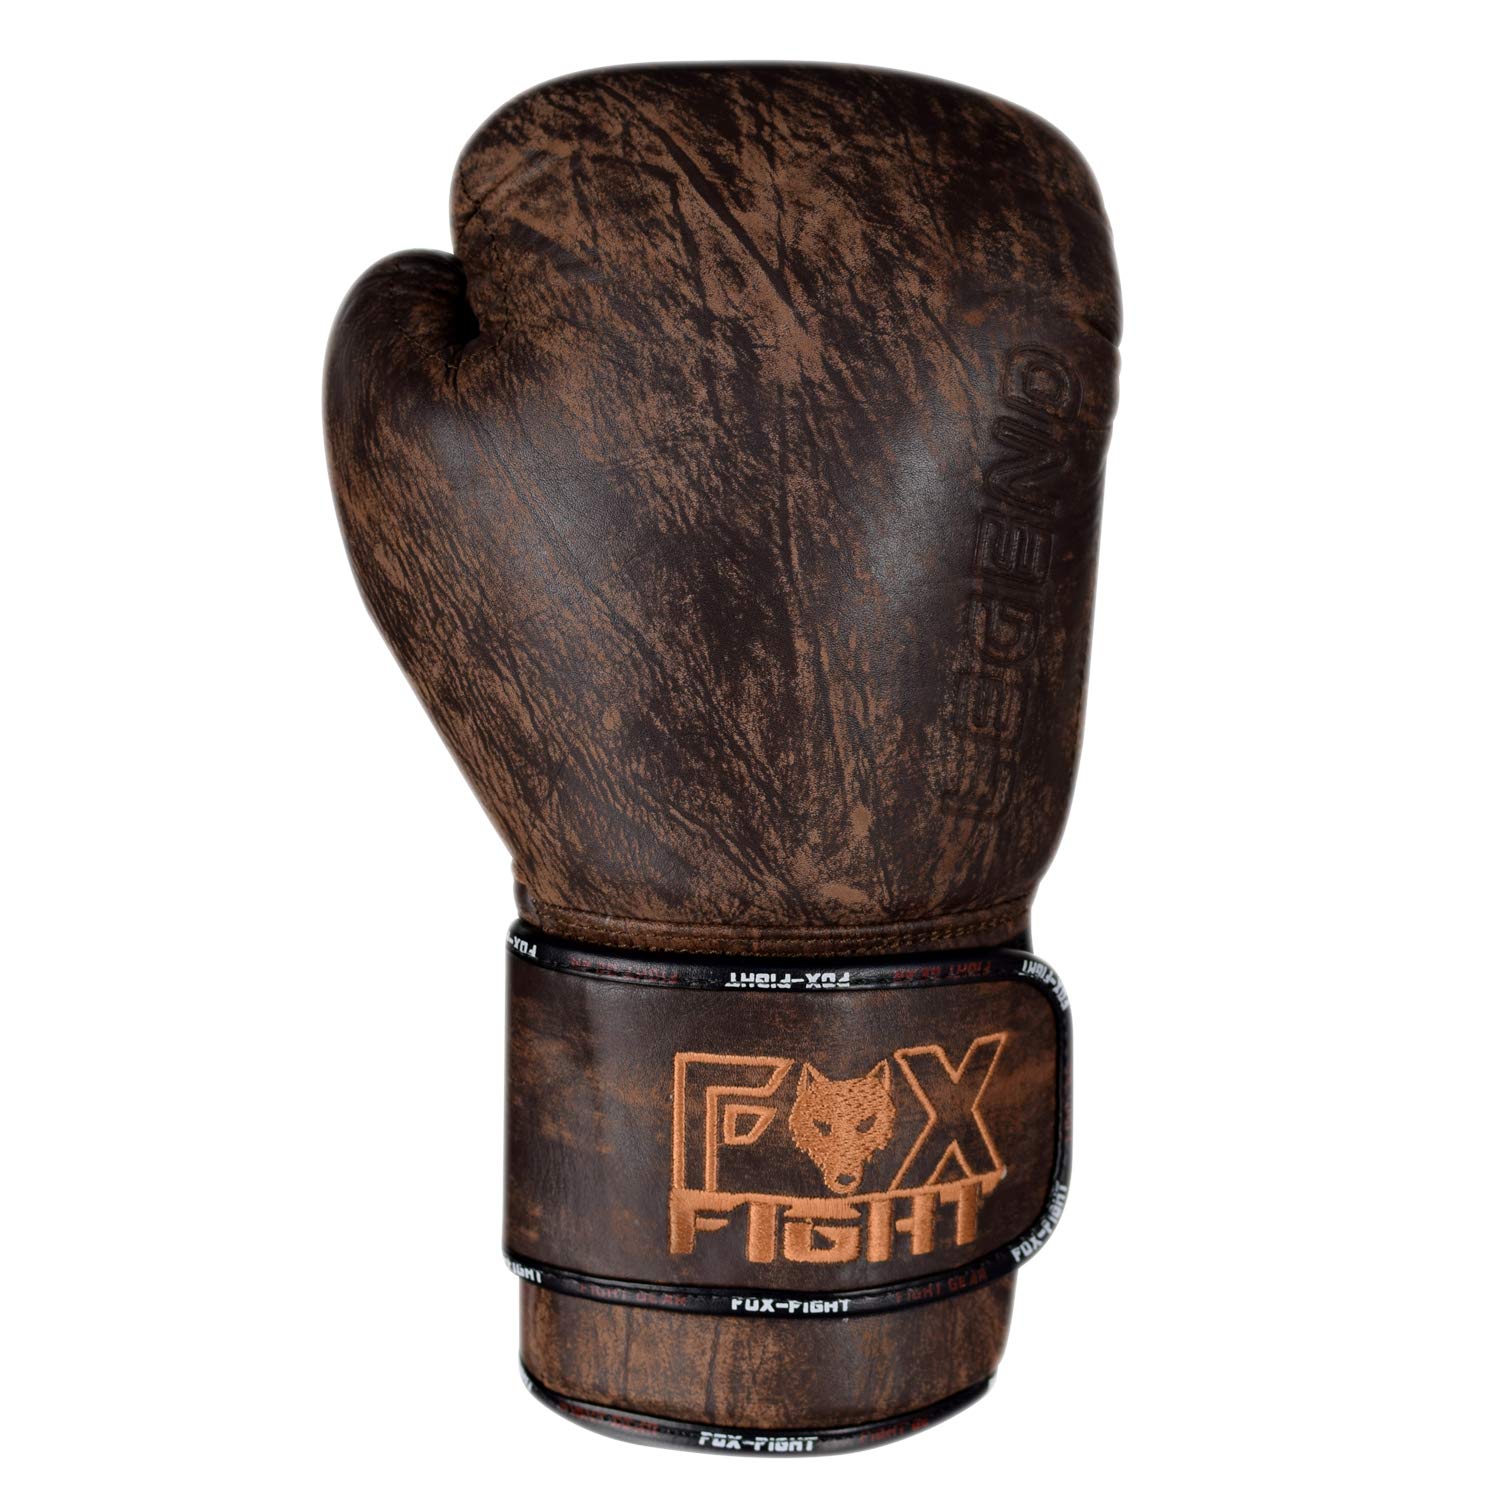 FOX-FIGHT Legend Boxhandschuhe aus echtem Leder Boxen Kickboxen Muay Thai Training Sparring 14 OZ braun